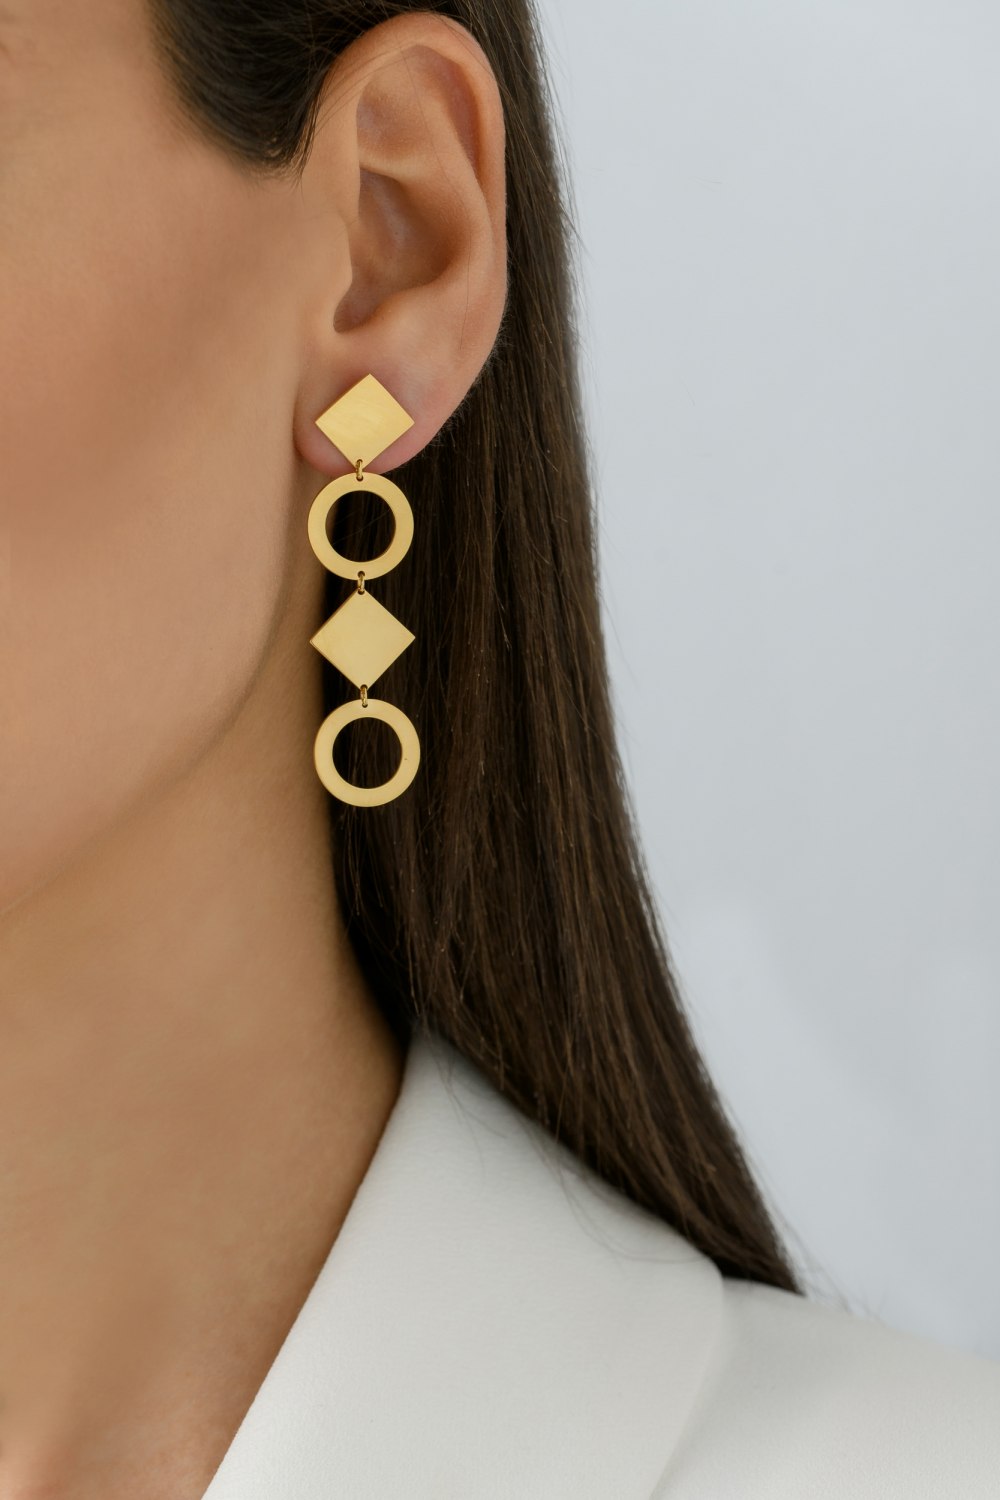 ANASTASIA KESSARIS - Geometric Elegance Gold Earrings